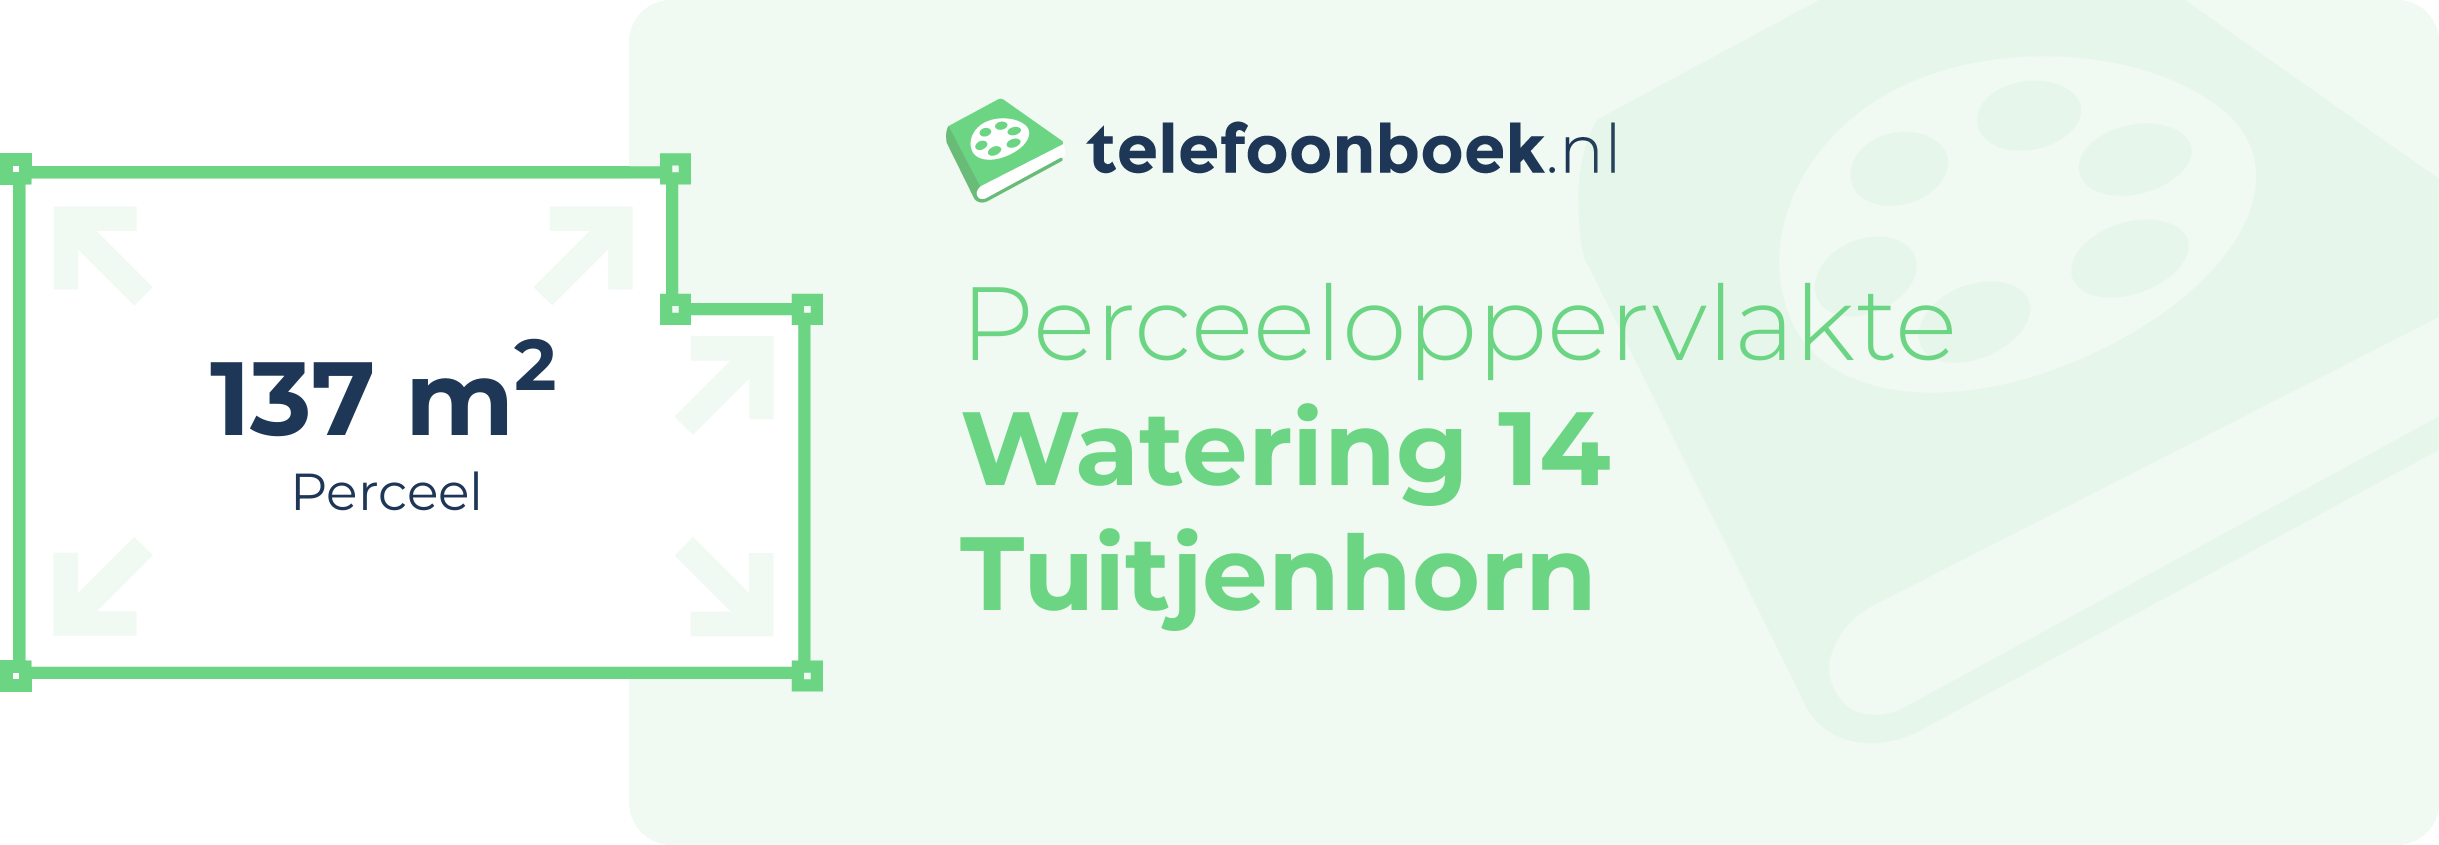 Perceeloppervlakte Watering 14 Tuitjenhorn